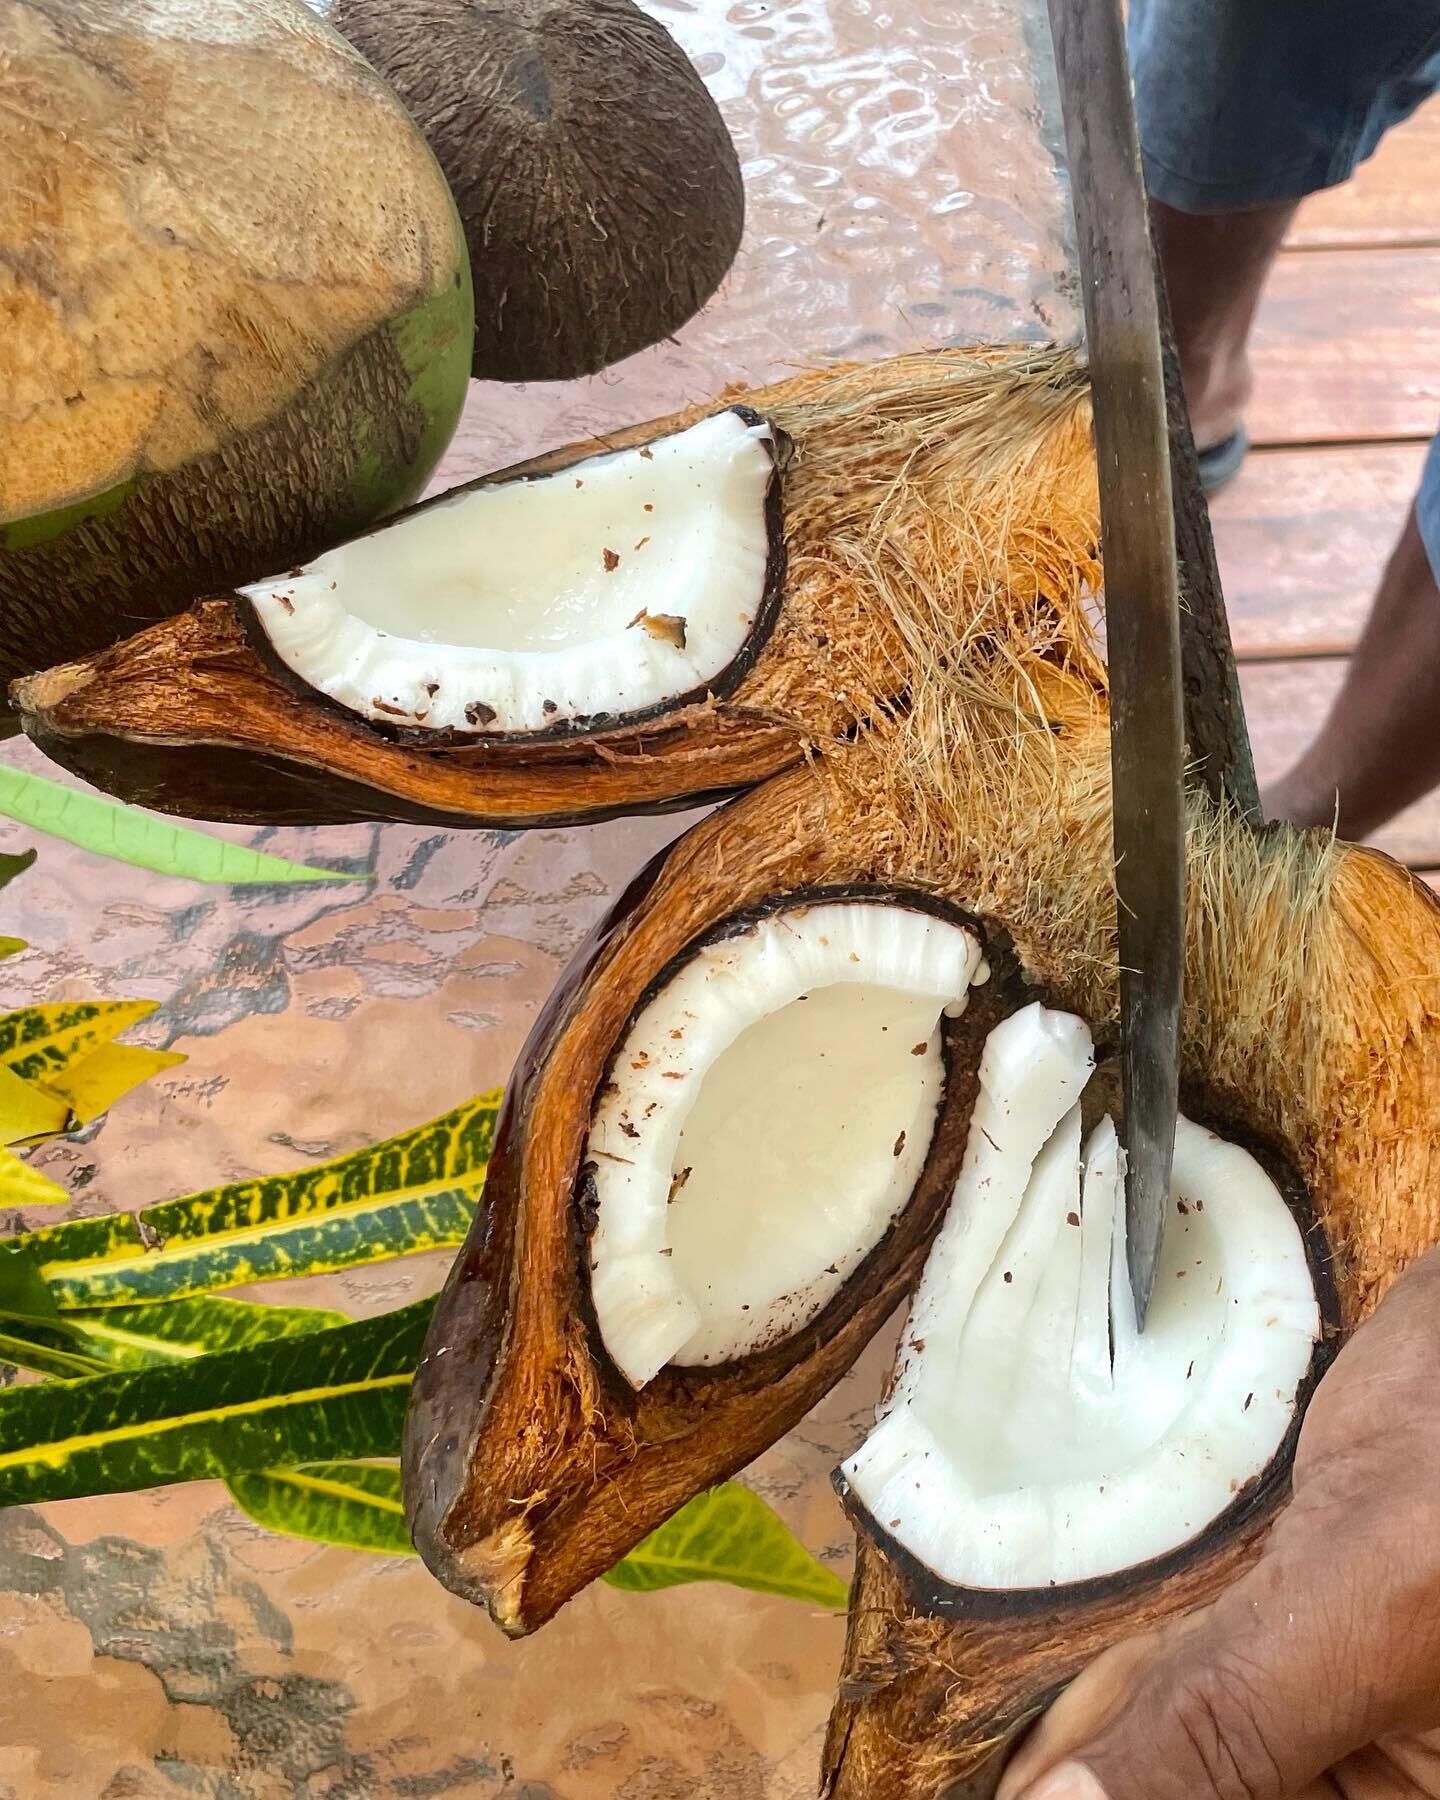 Get a Machete. 

#coconut #igotamachete #fiji #savusavu #villagelife #freshcoconut #knifeskills